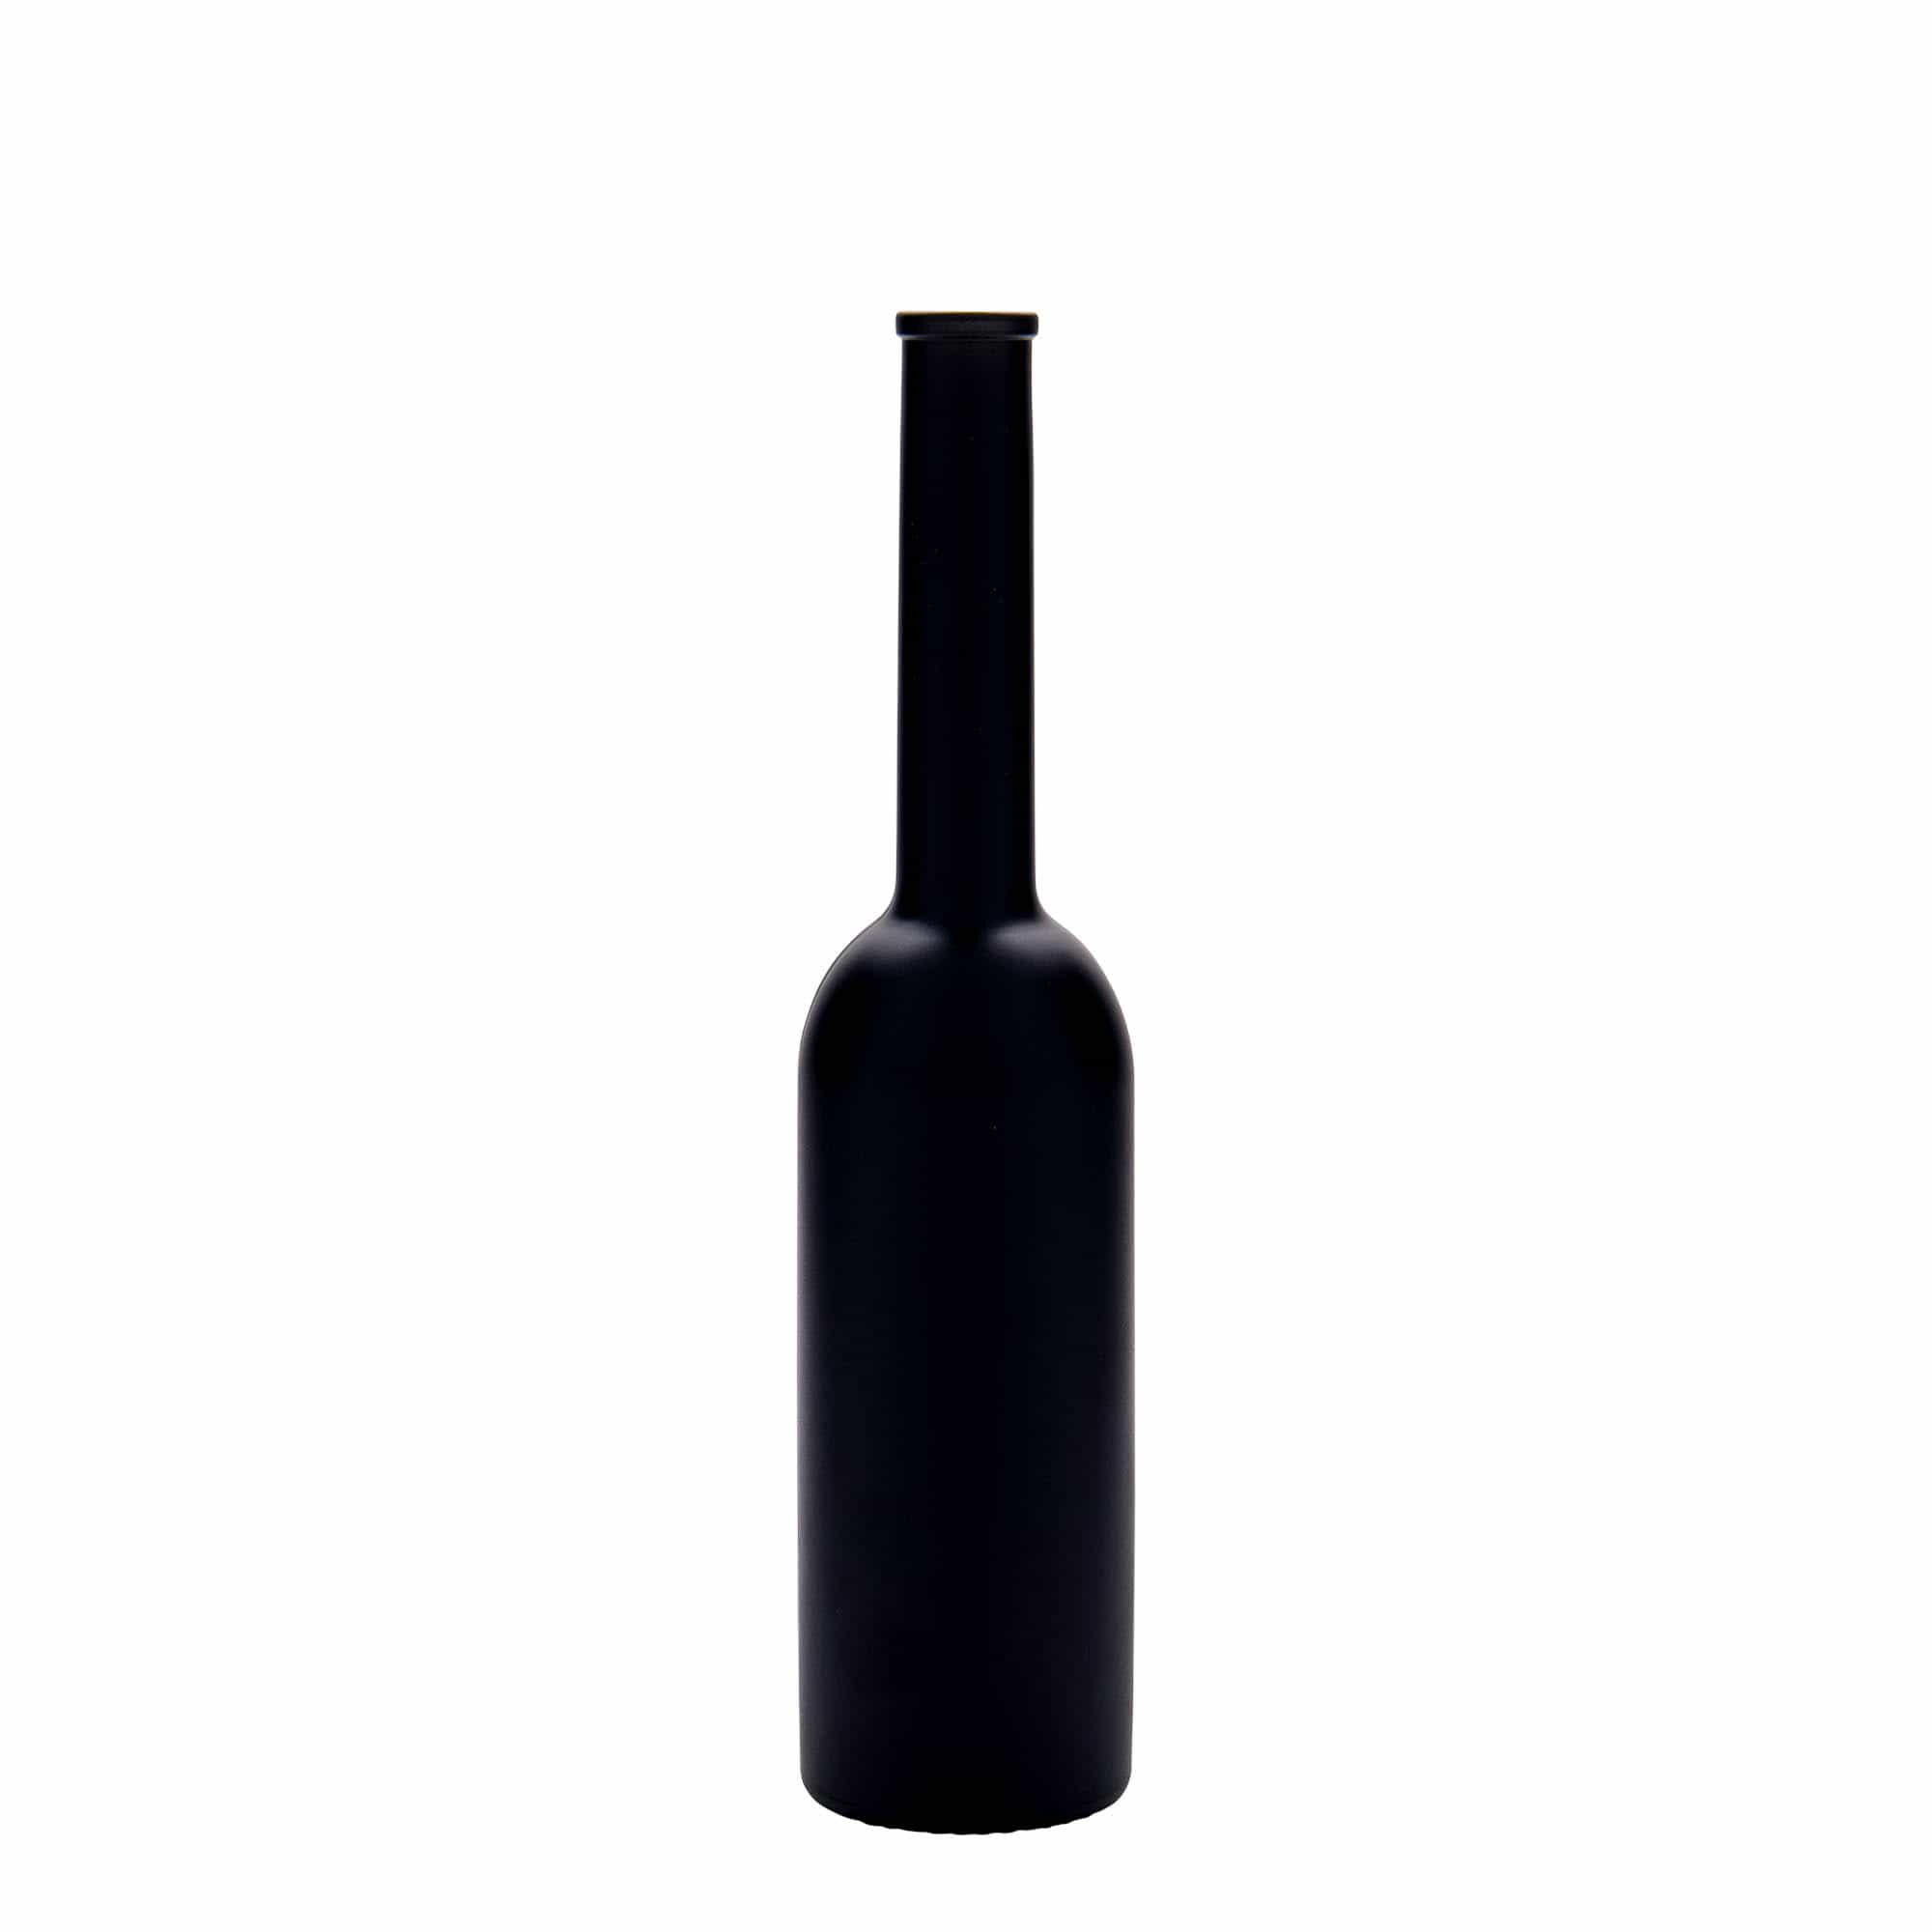 200 ml glasflaske 'Opera', sort, åbning: Kork